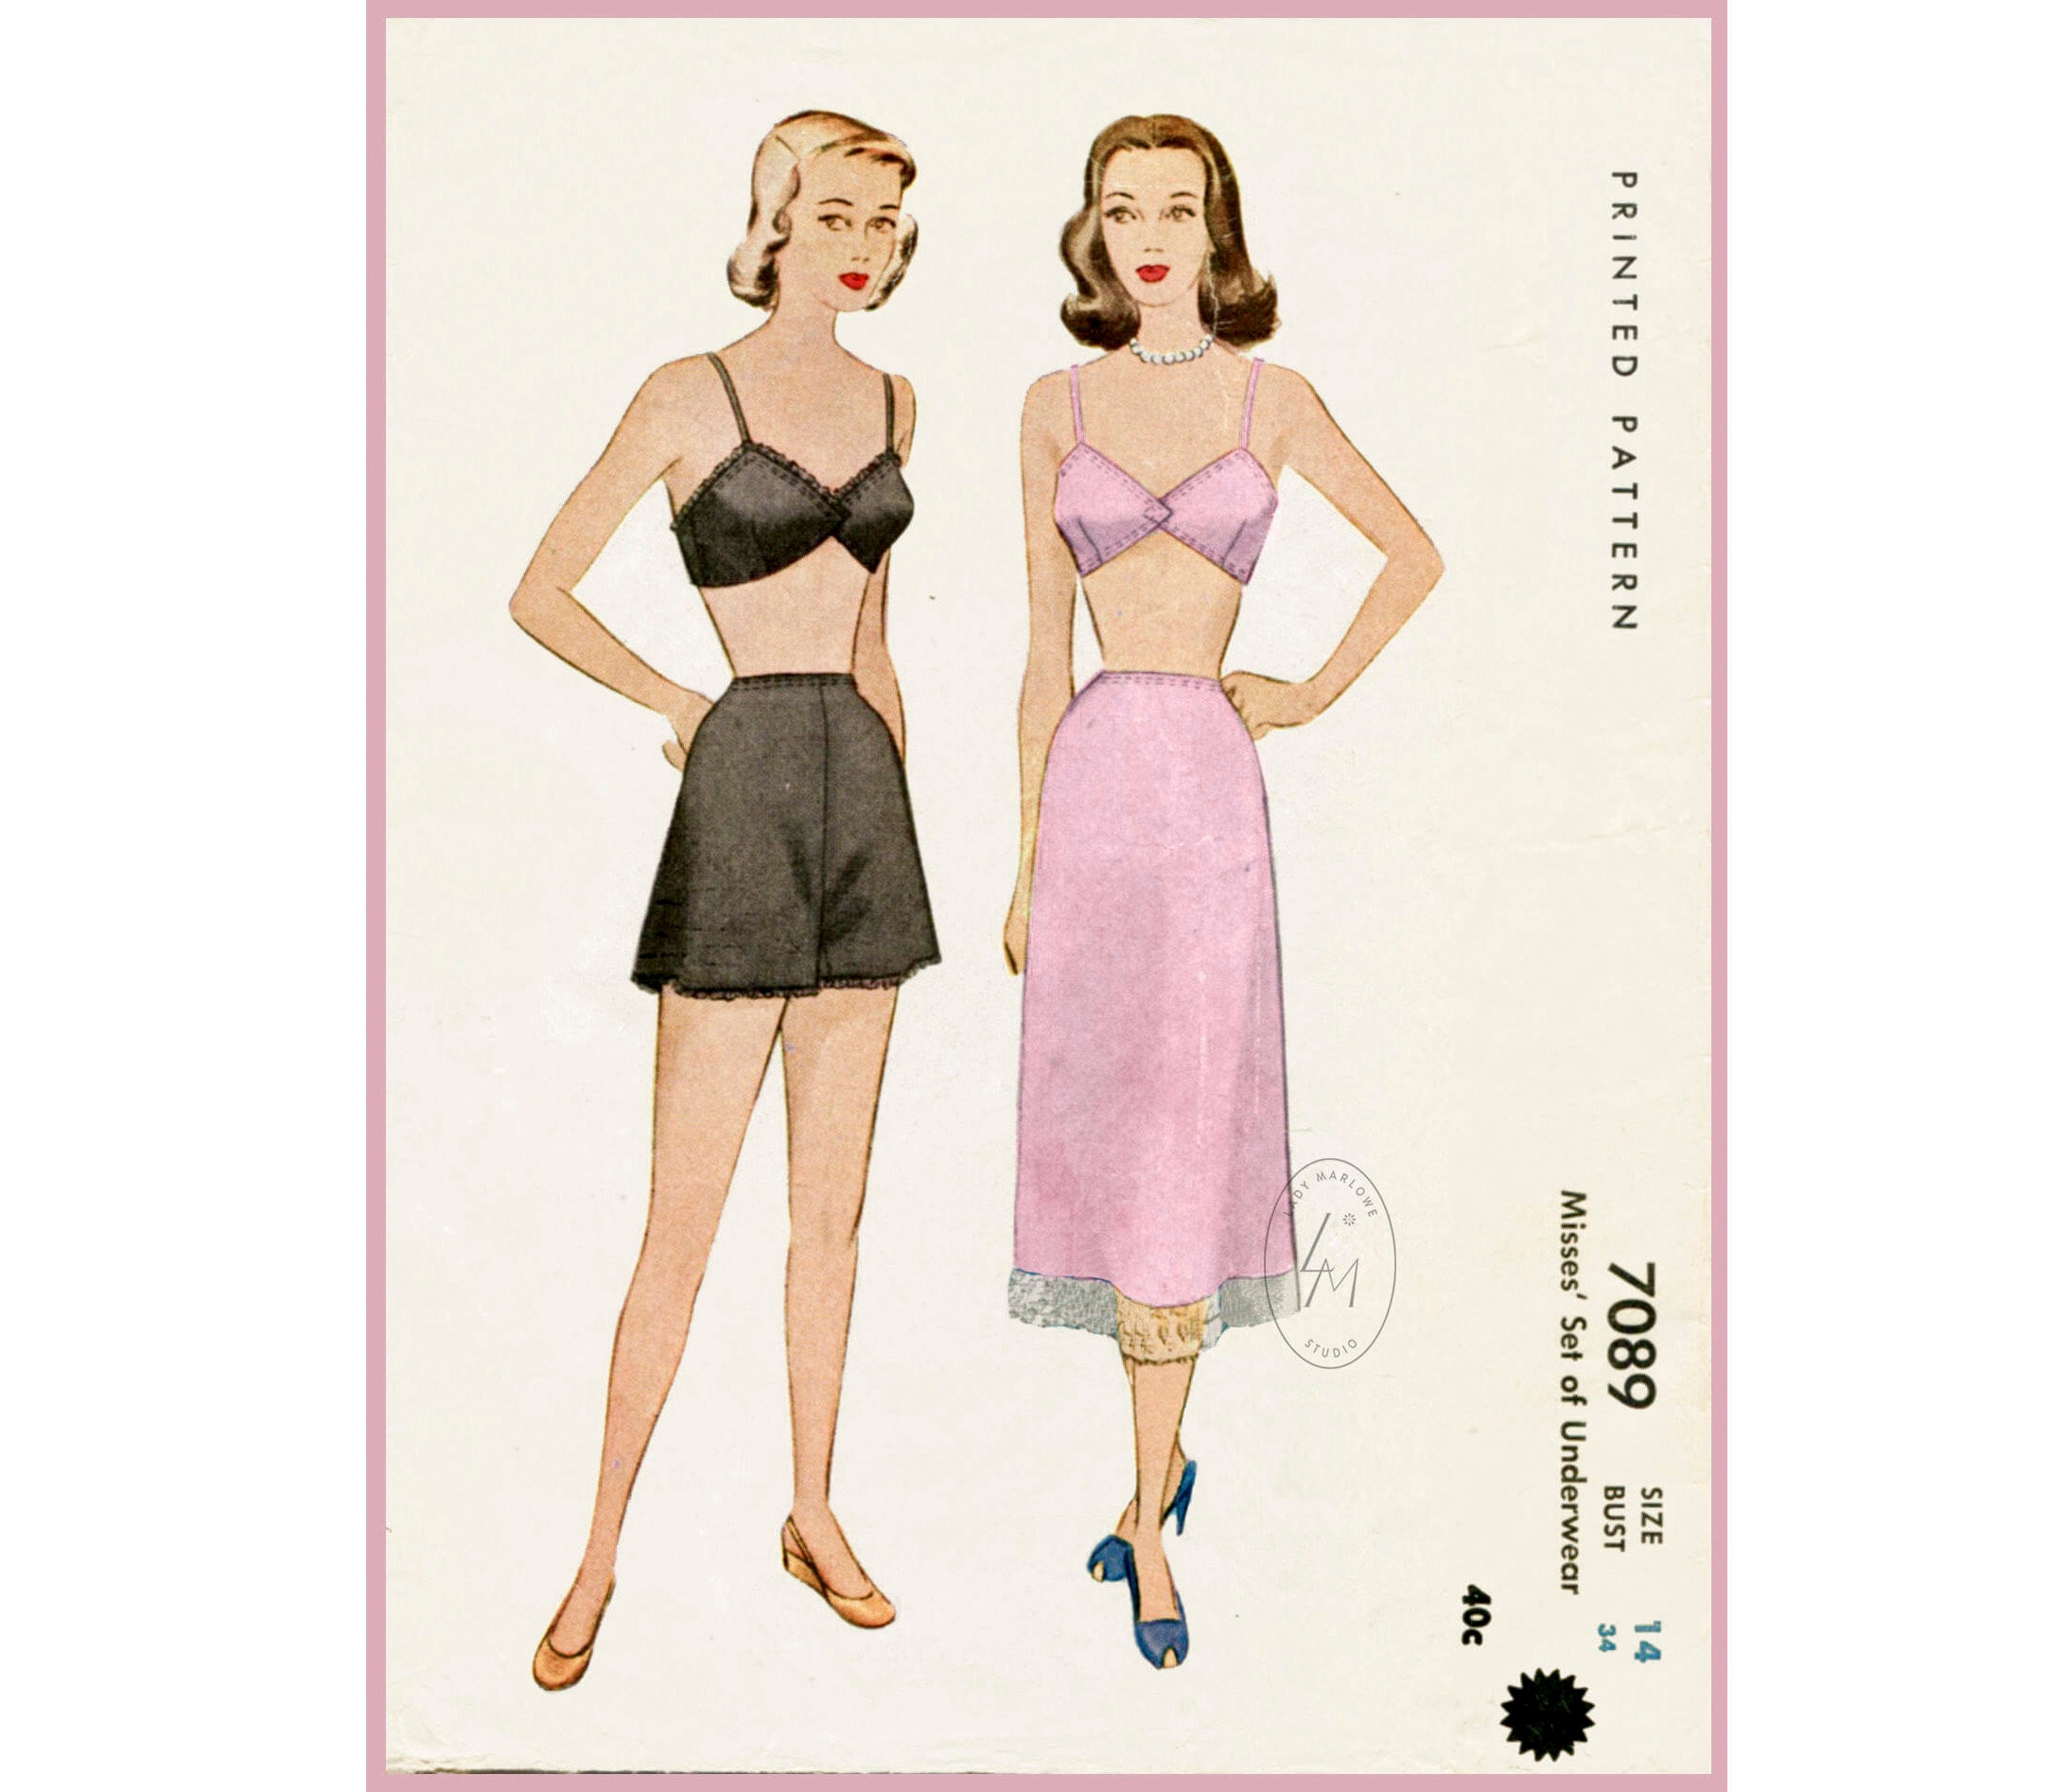 Vintage Sewing Pattern Vintage Bra Pattern 1940s 1950s Lingerie